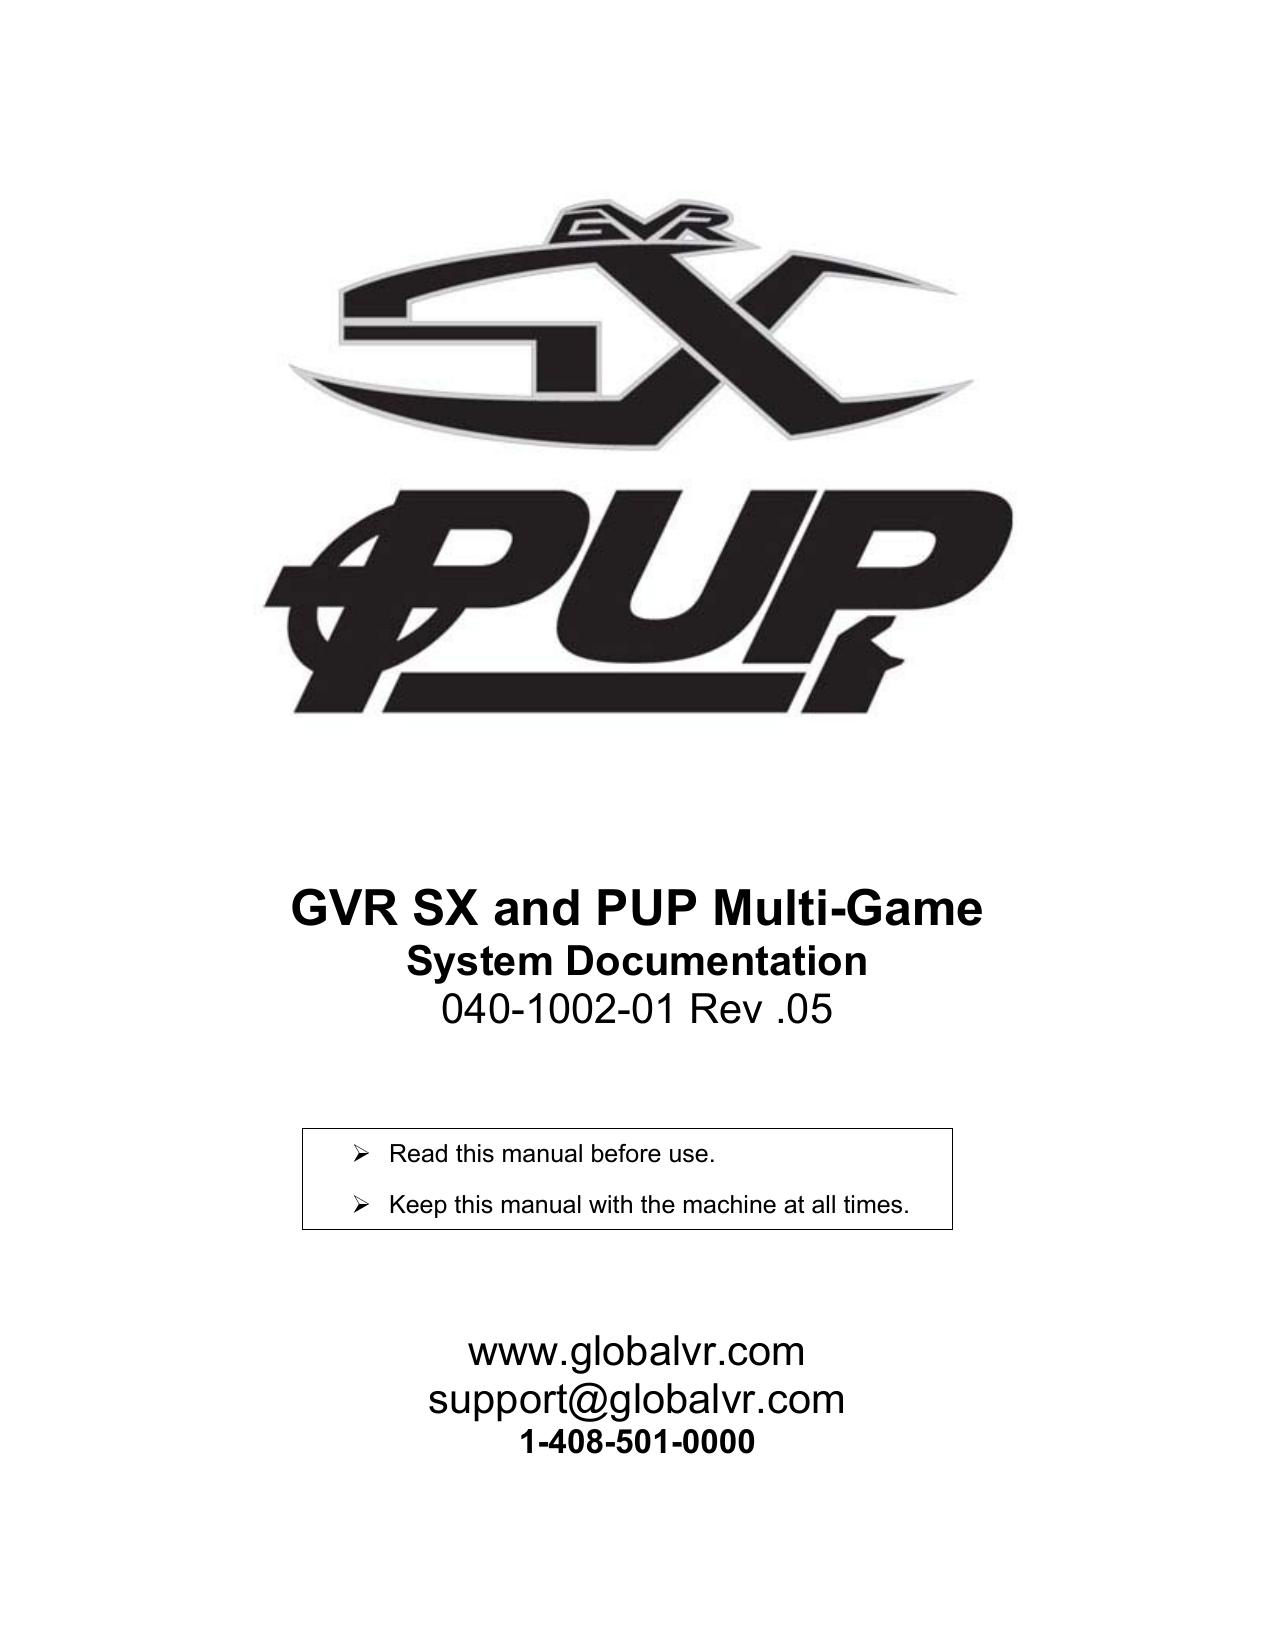 Microsoft Word - 040-1002-01-PUP-System-Manual-8x11.doc